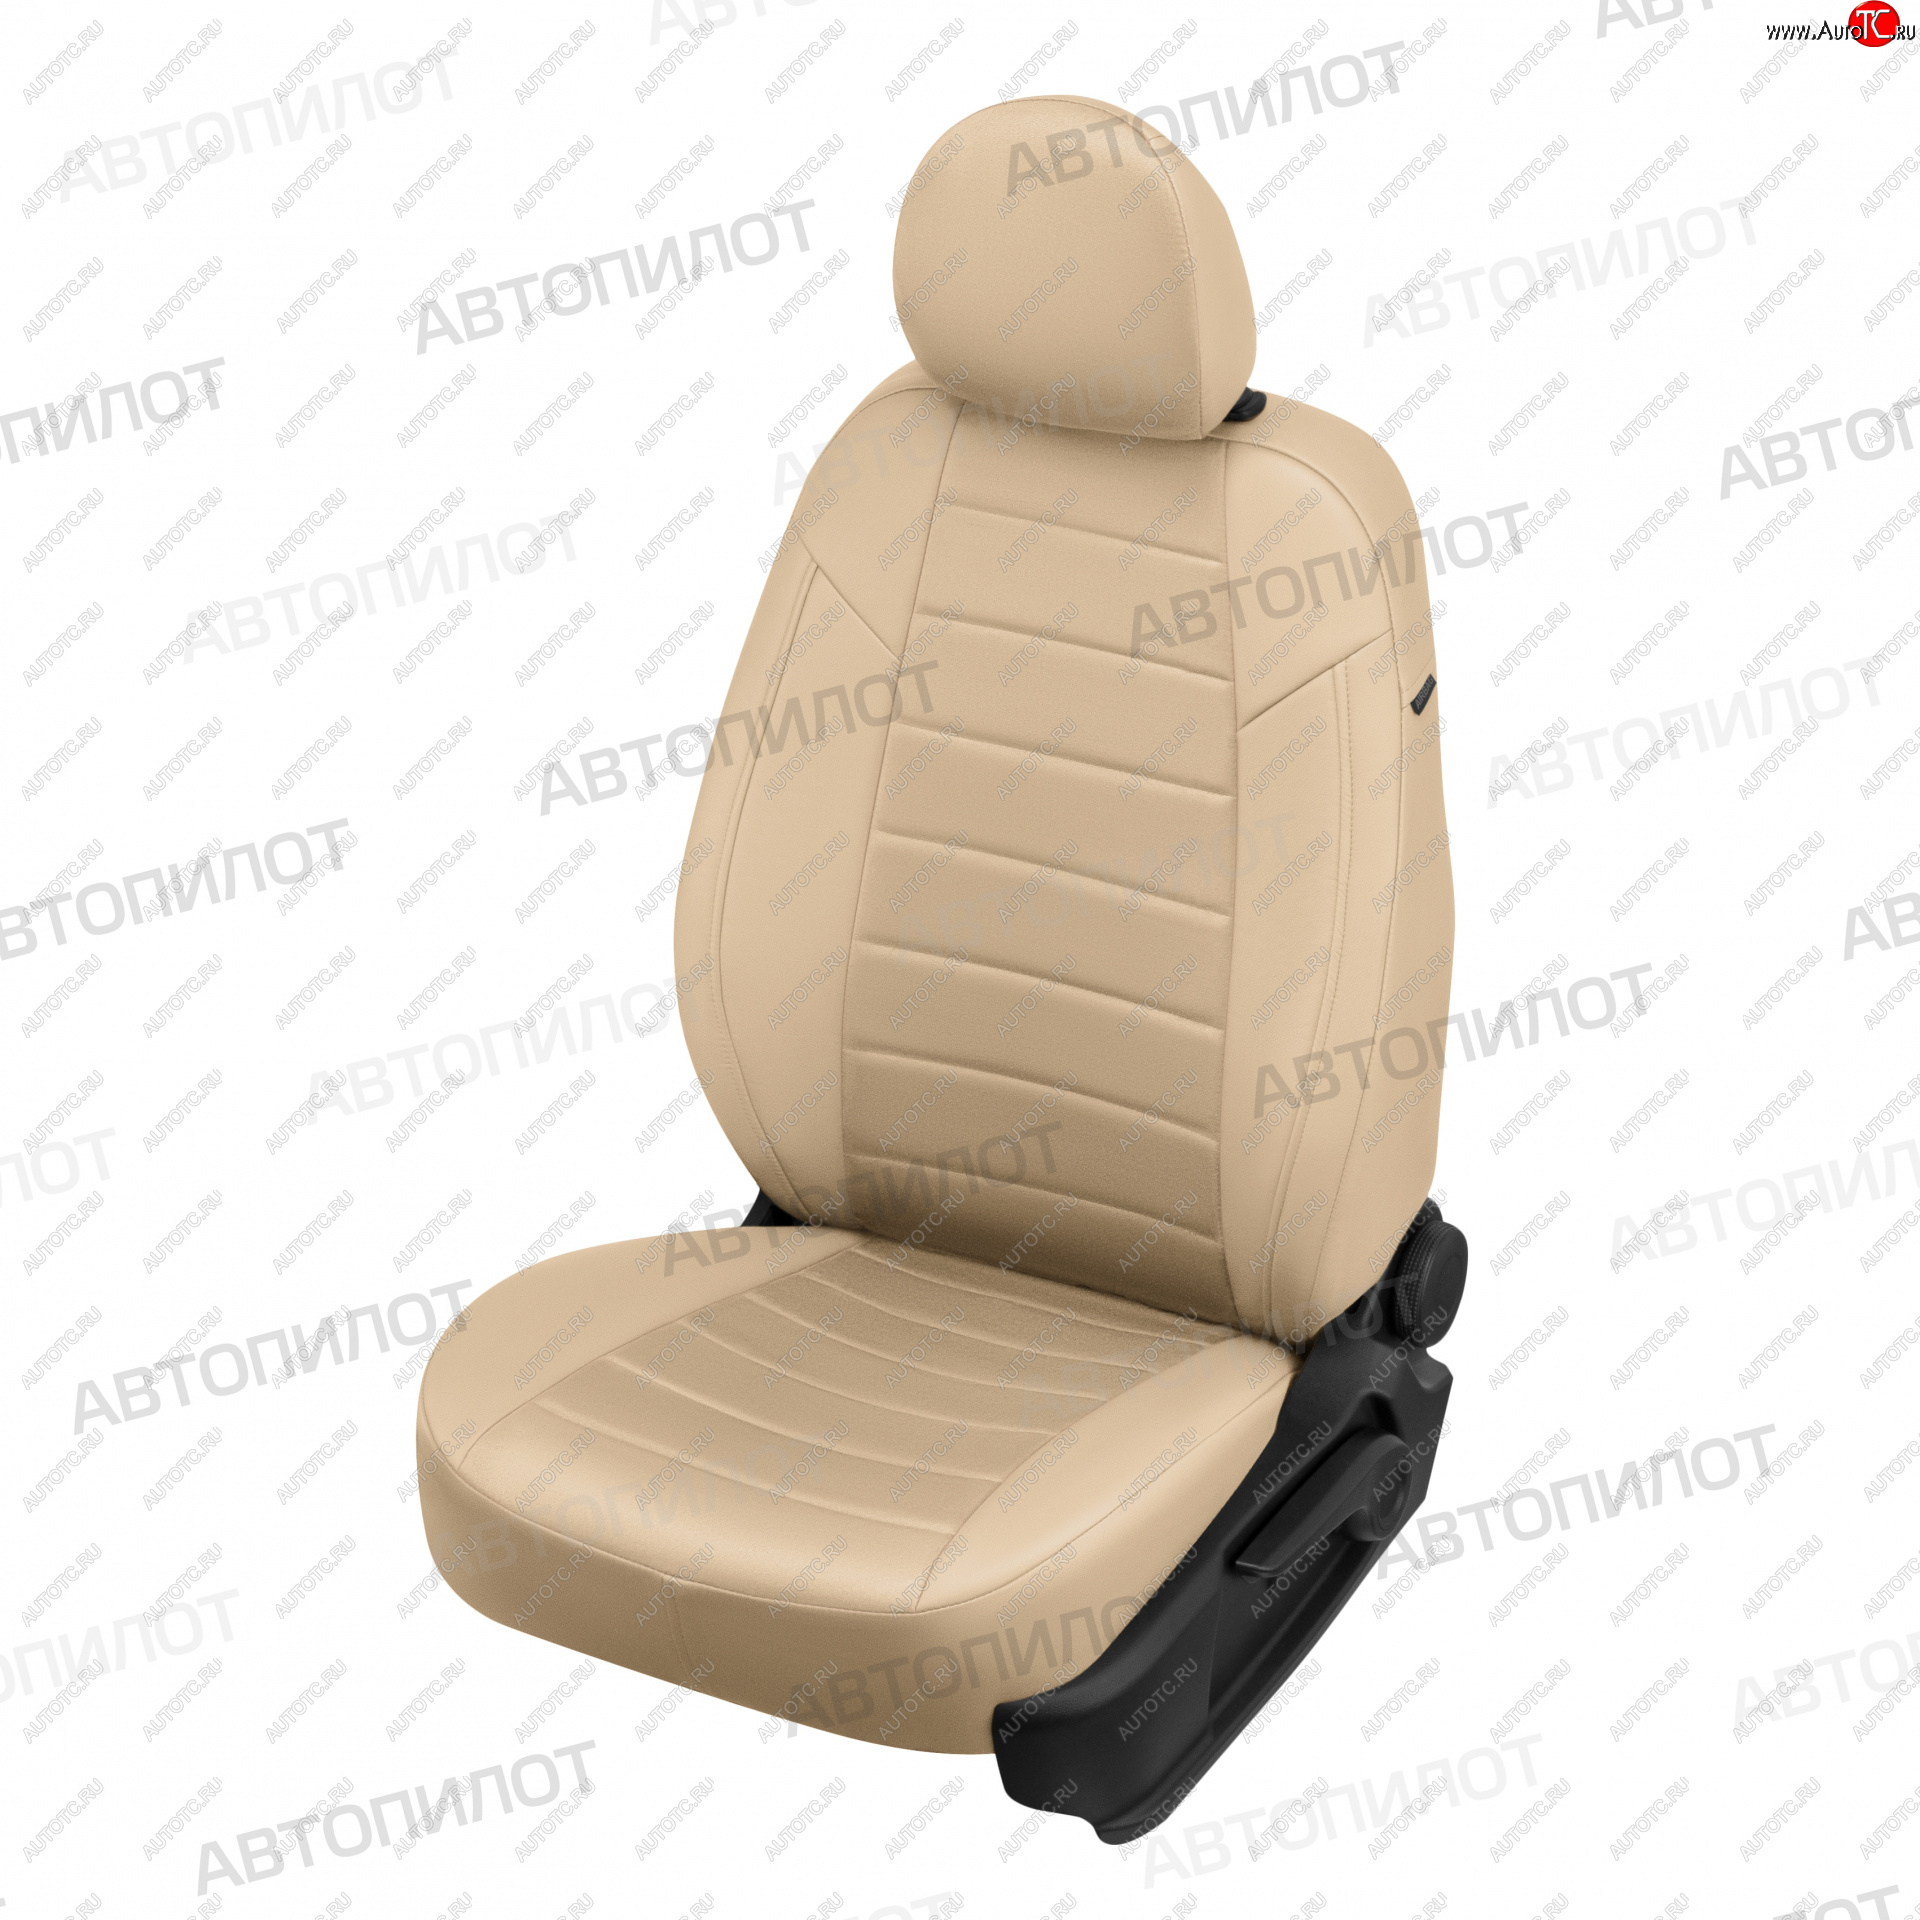 21 599 р. Чехлы сидений (9 мест, экокожа/алькантара) Автопилот  Ford Transit  3 (2006-2014) (бежевый)